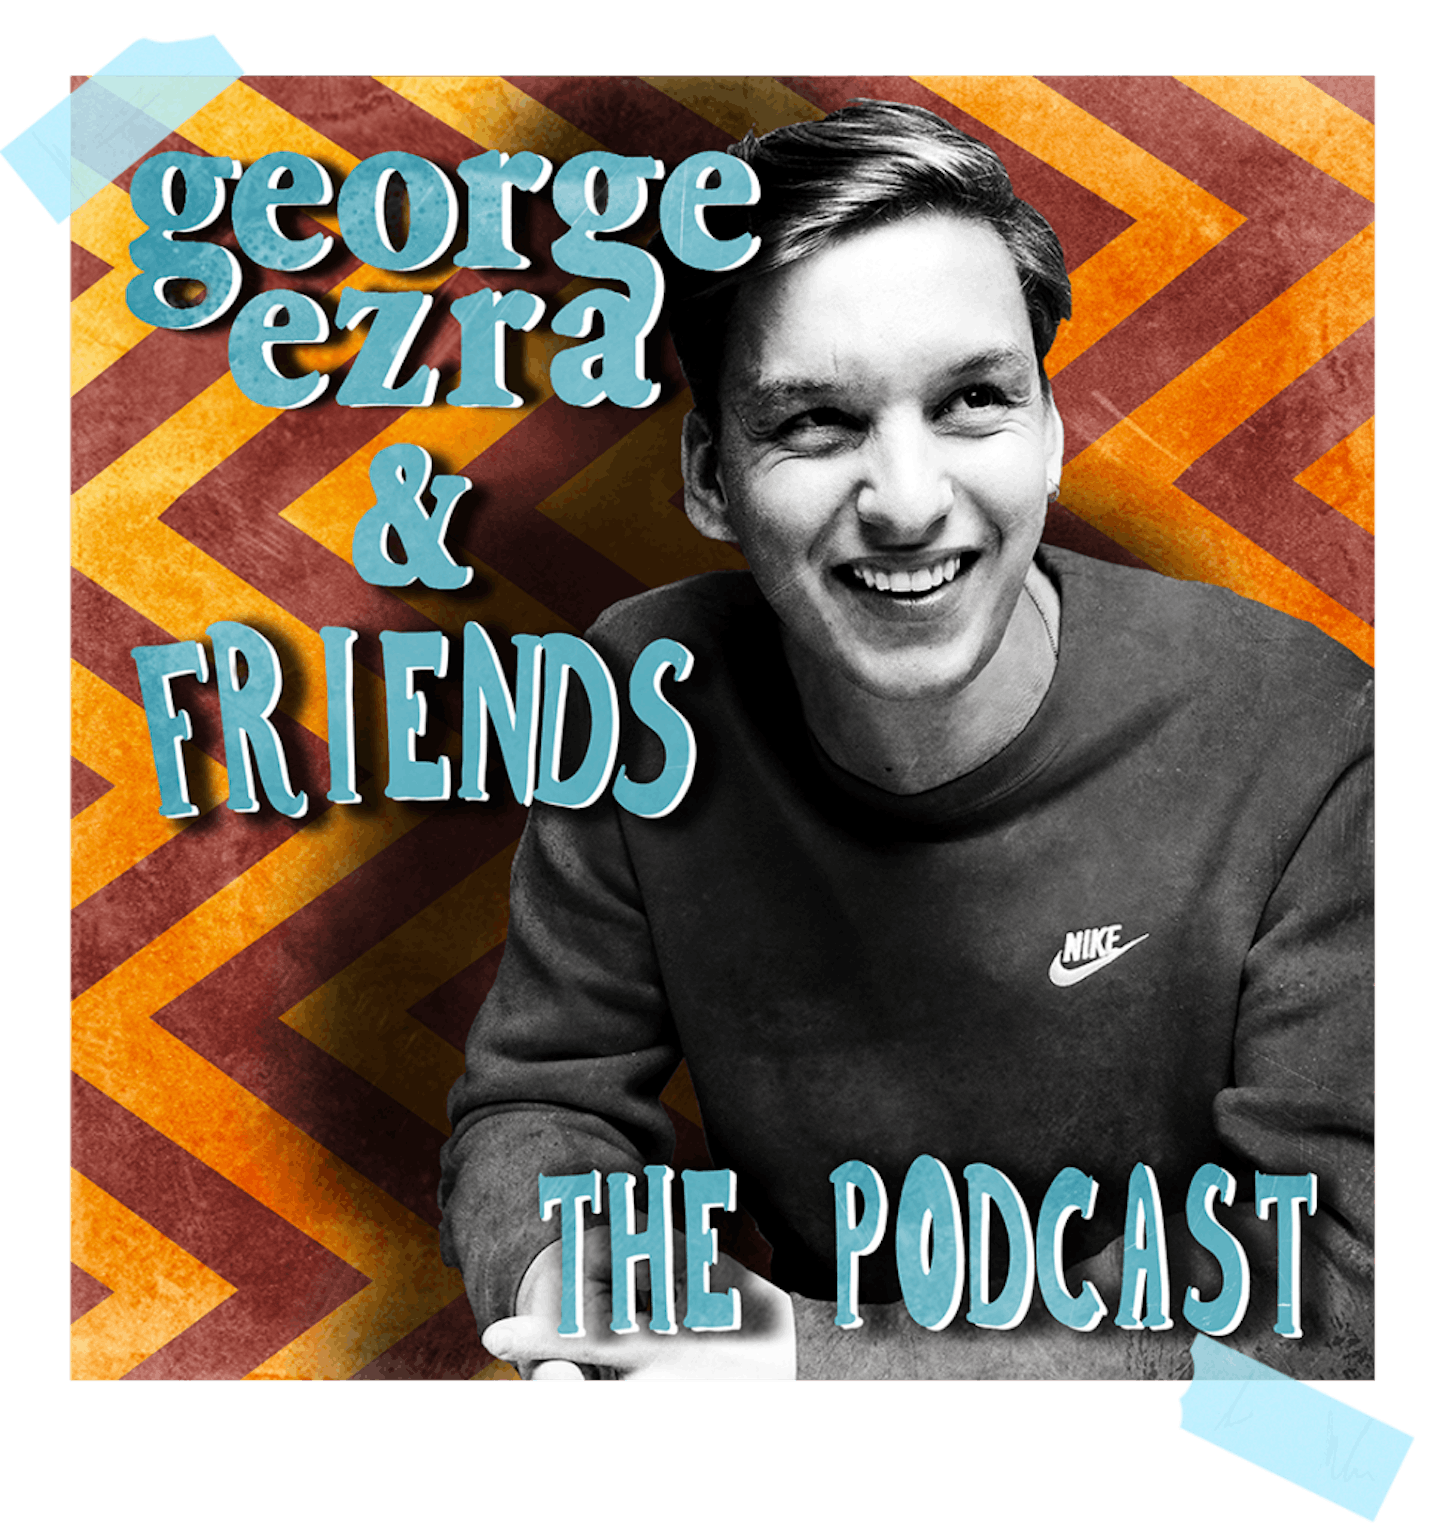 George Ezra and friends